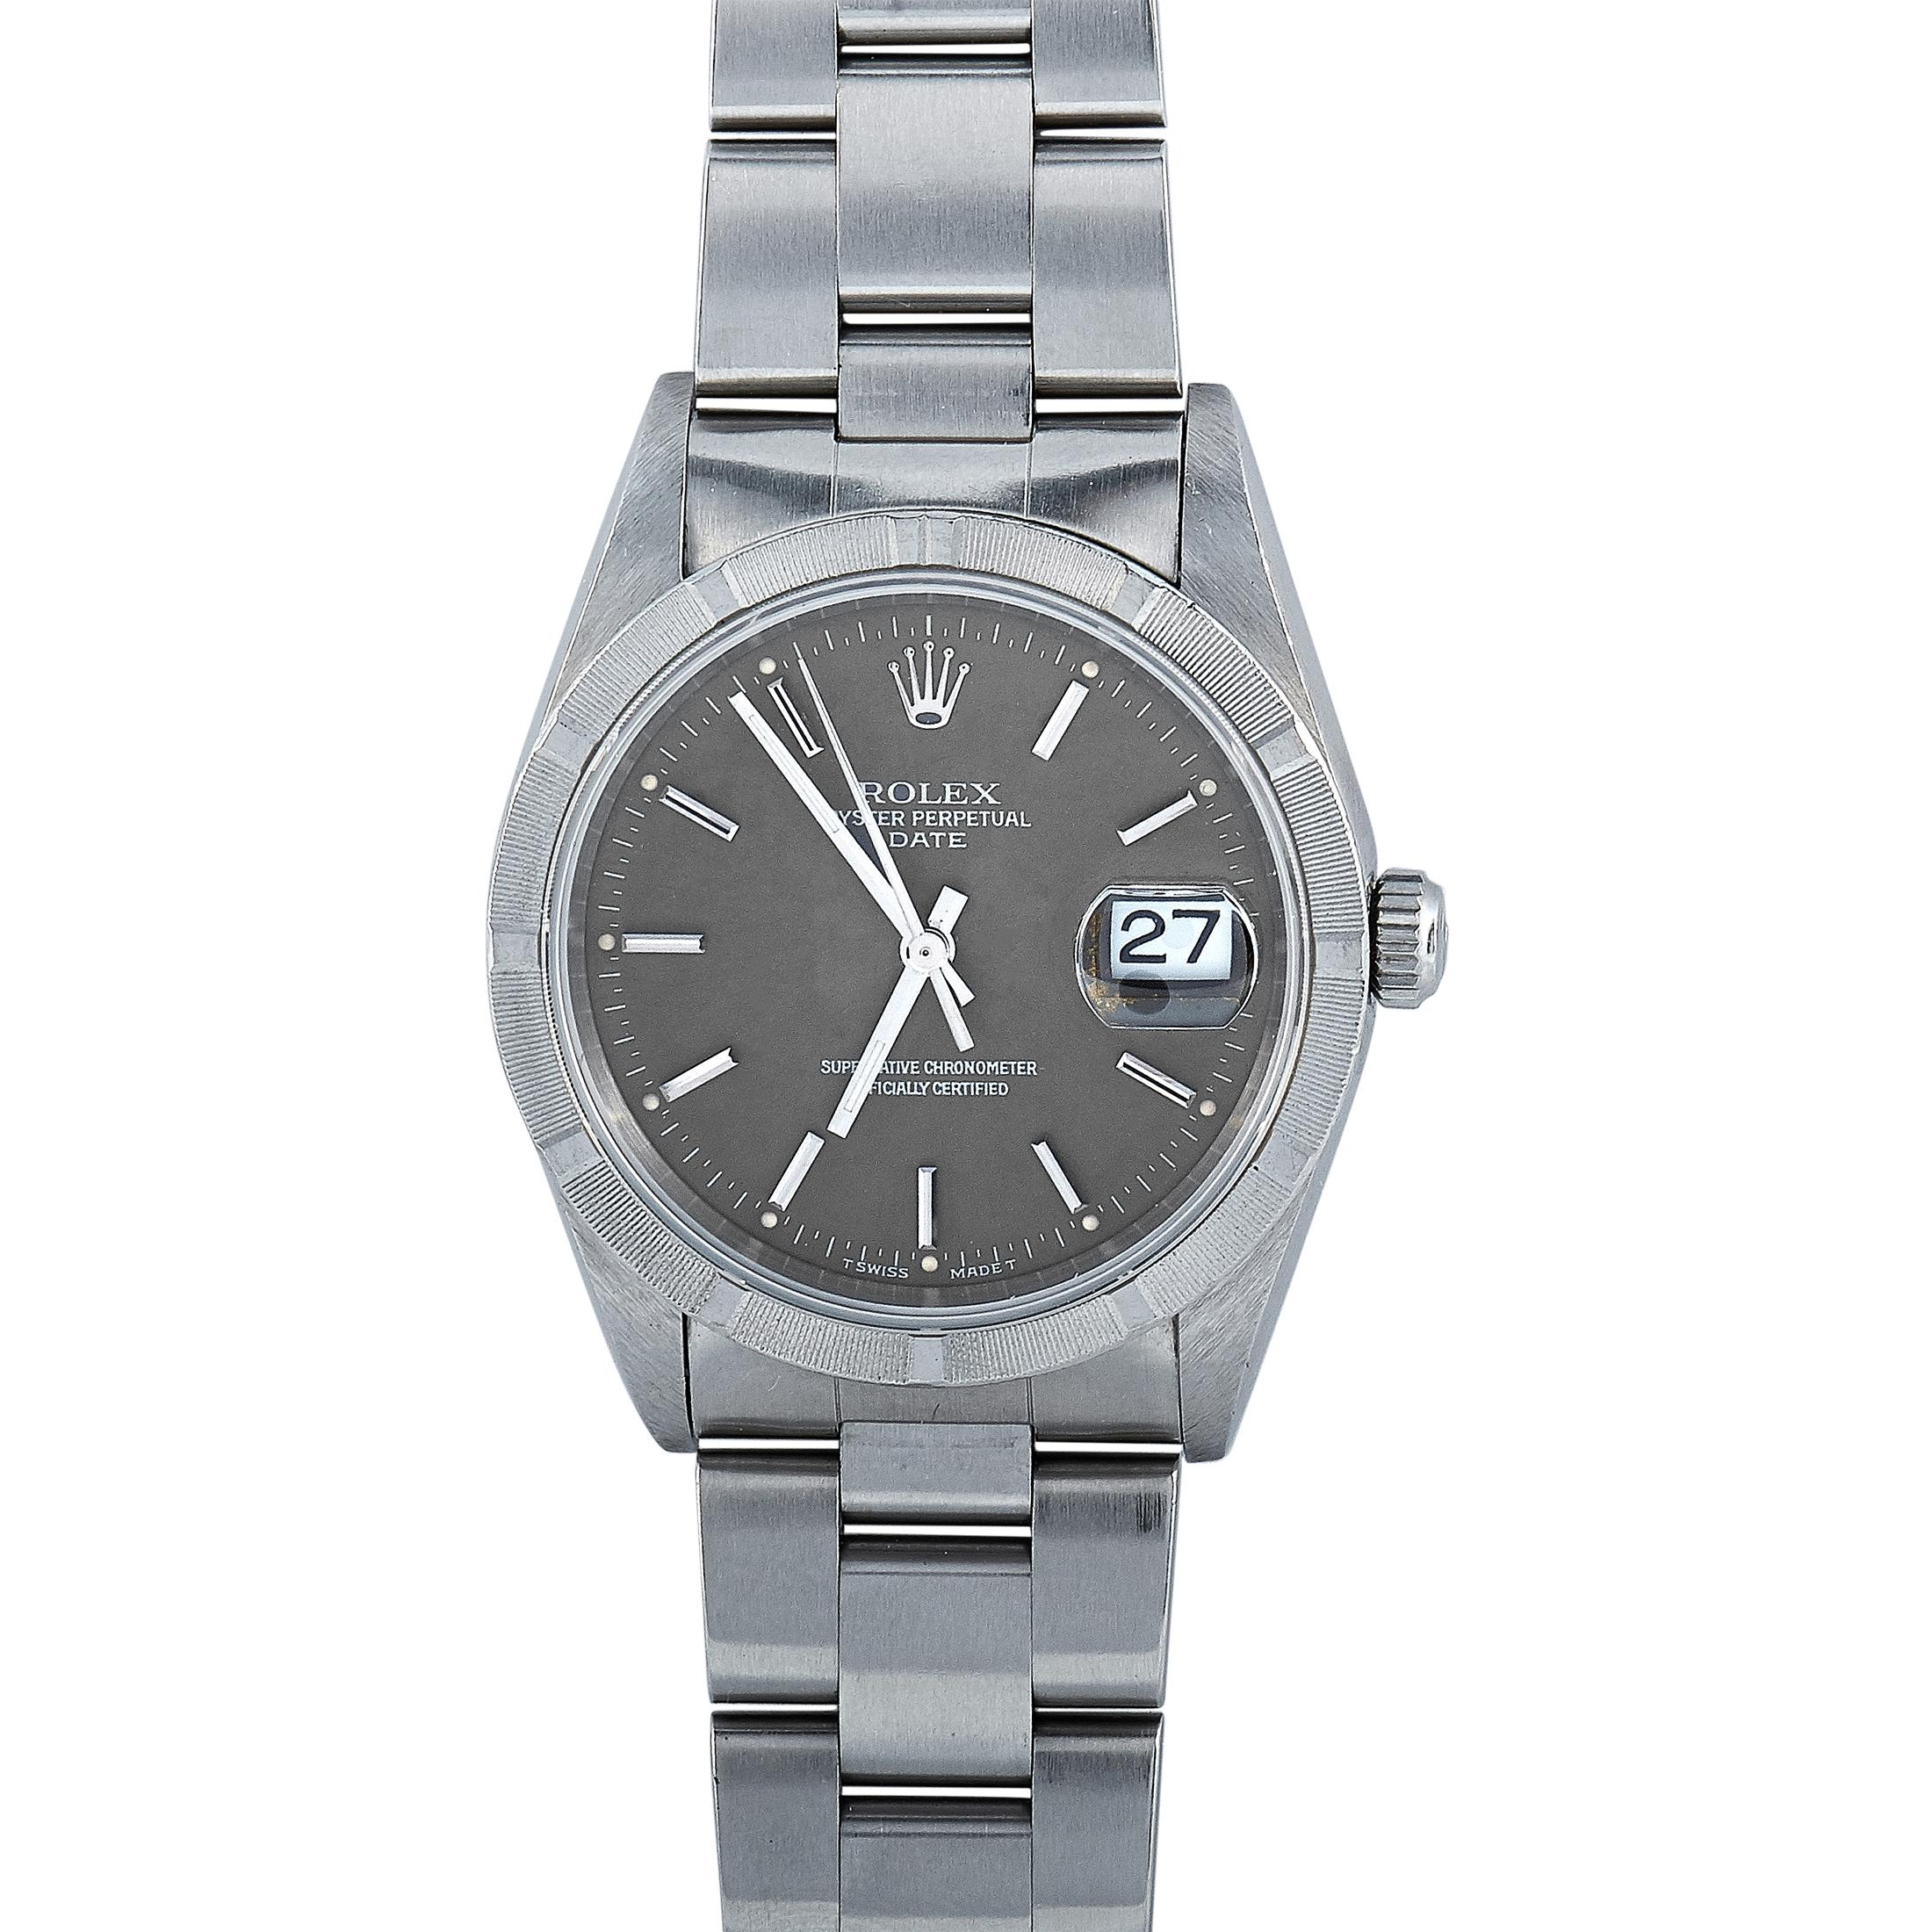 Men's Rolex Oyster Perpetual Date Watch W785217